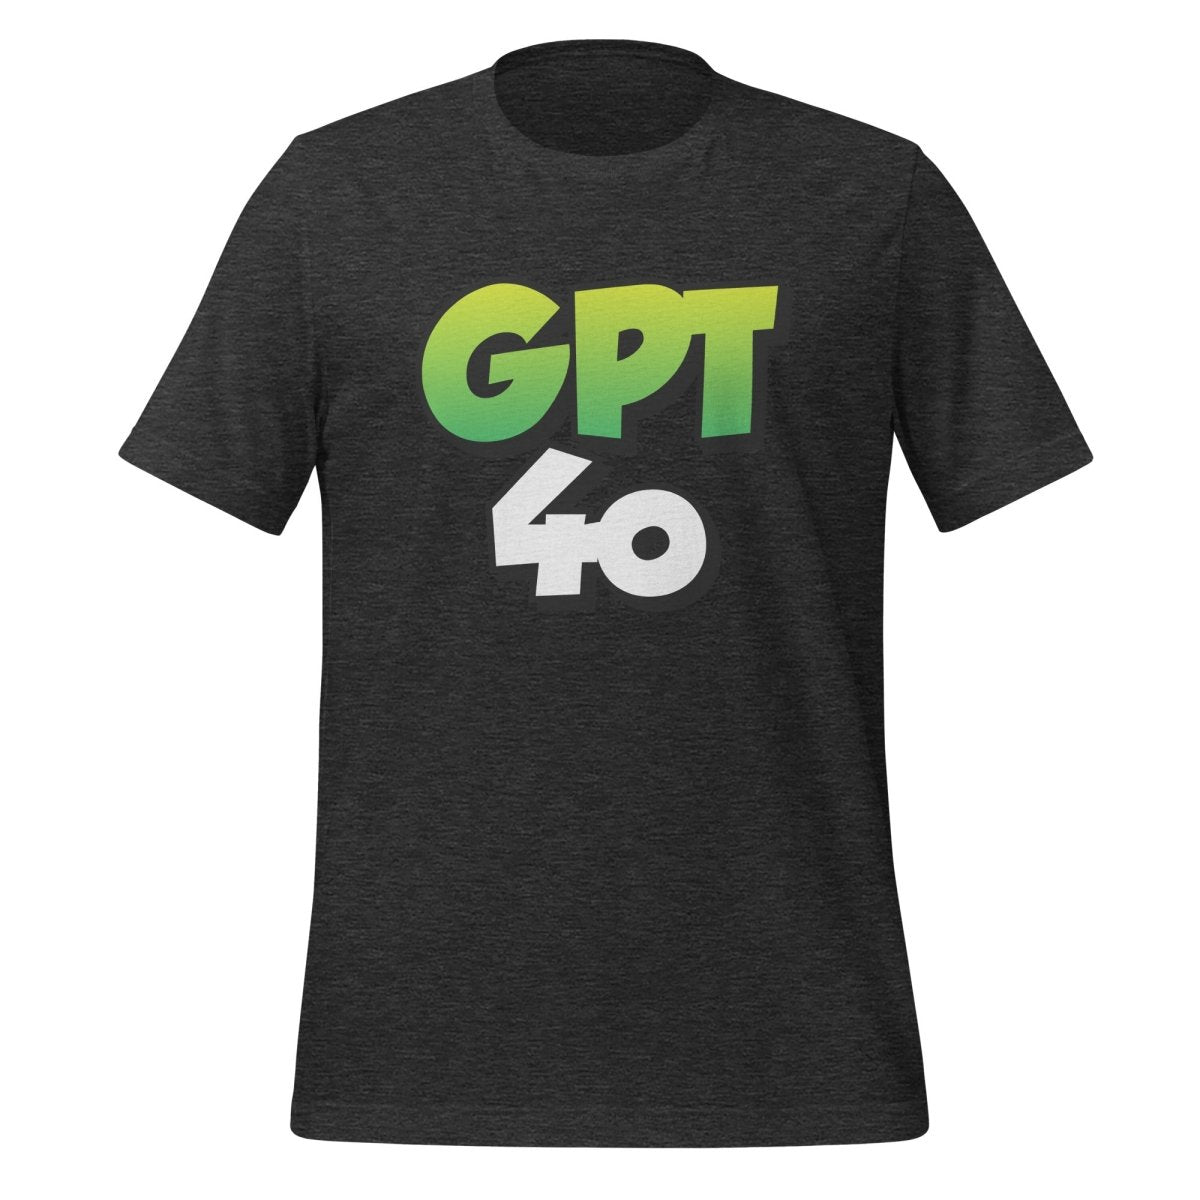 GPT 4o Ben 10 - Style T - Shirt (unisex) - Dark Grey Heather - AI Store